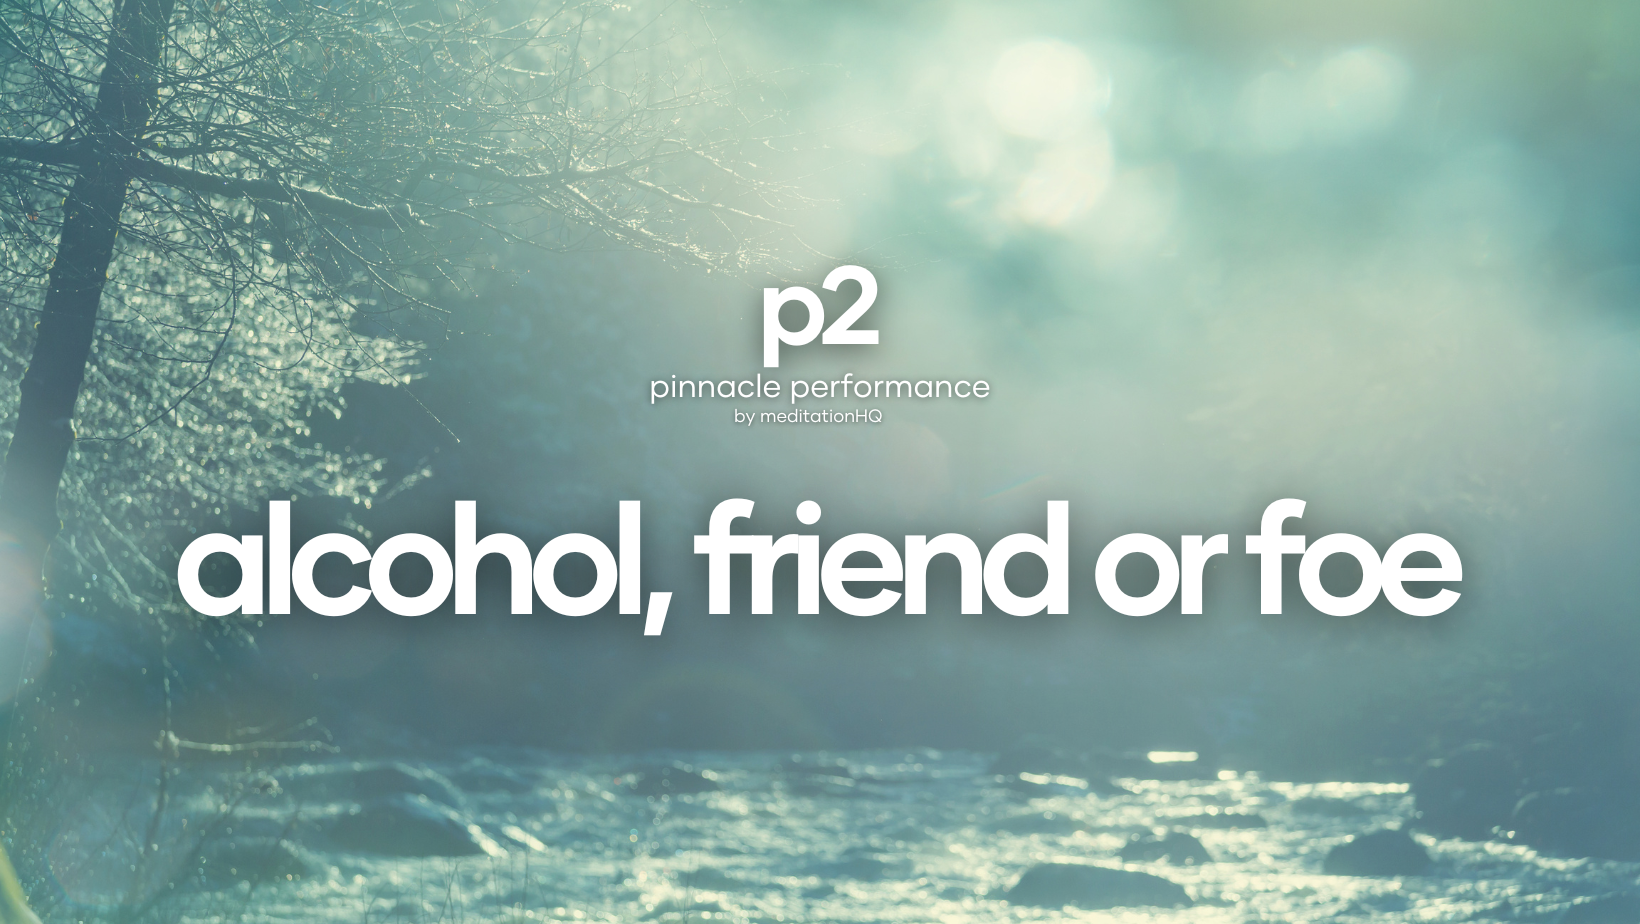 alcohol, friend or foe